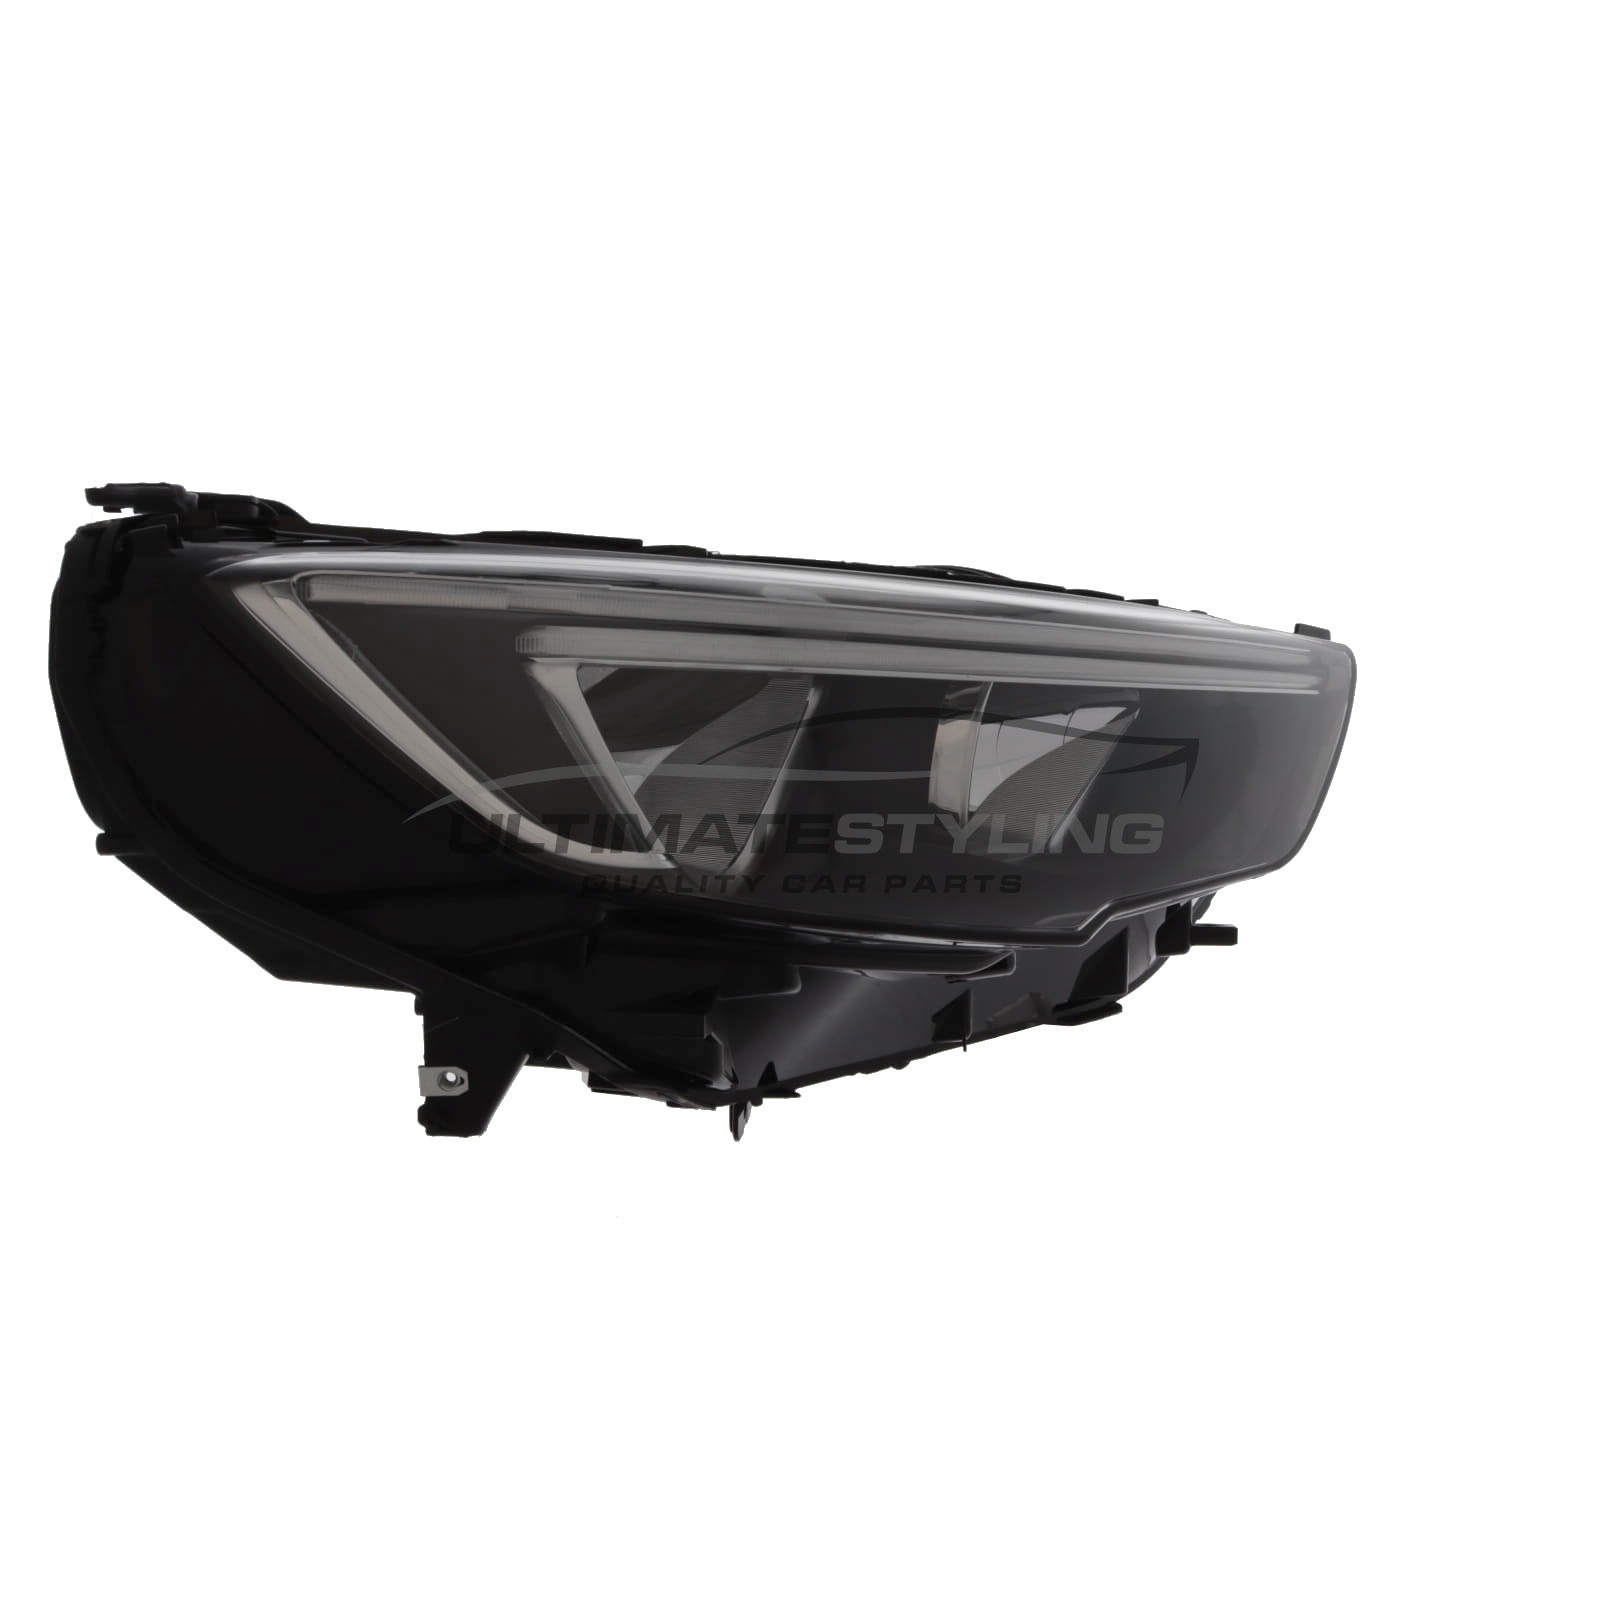 Vauxhall Insignia Headlight / Headlamp - Drivers Side (RH